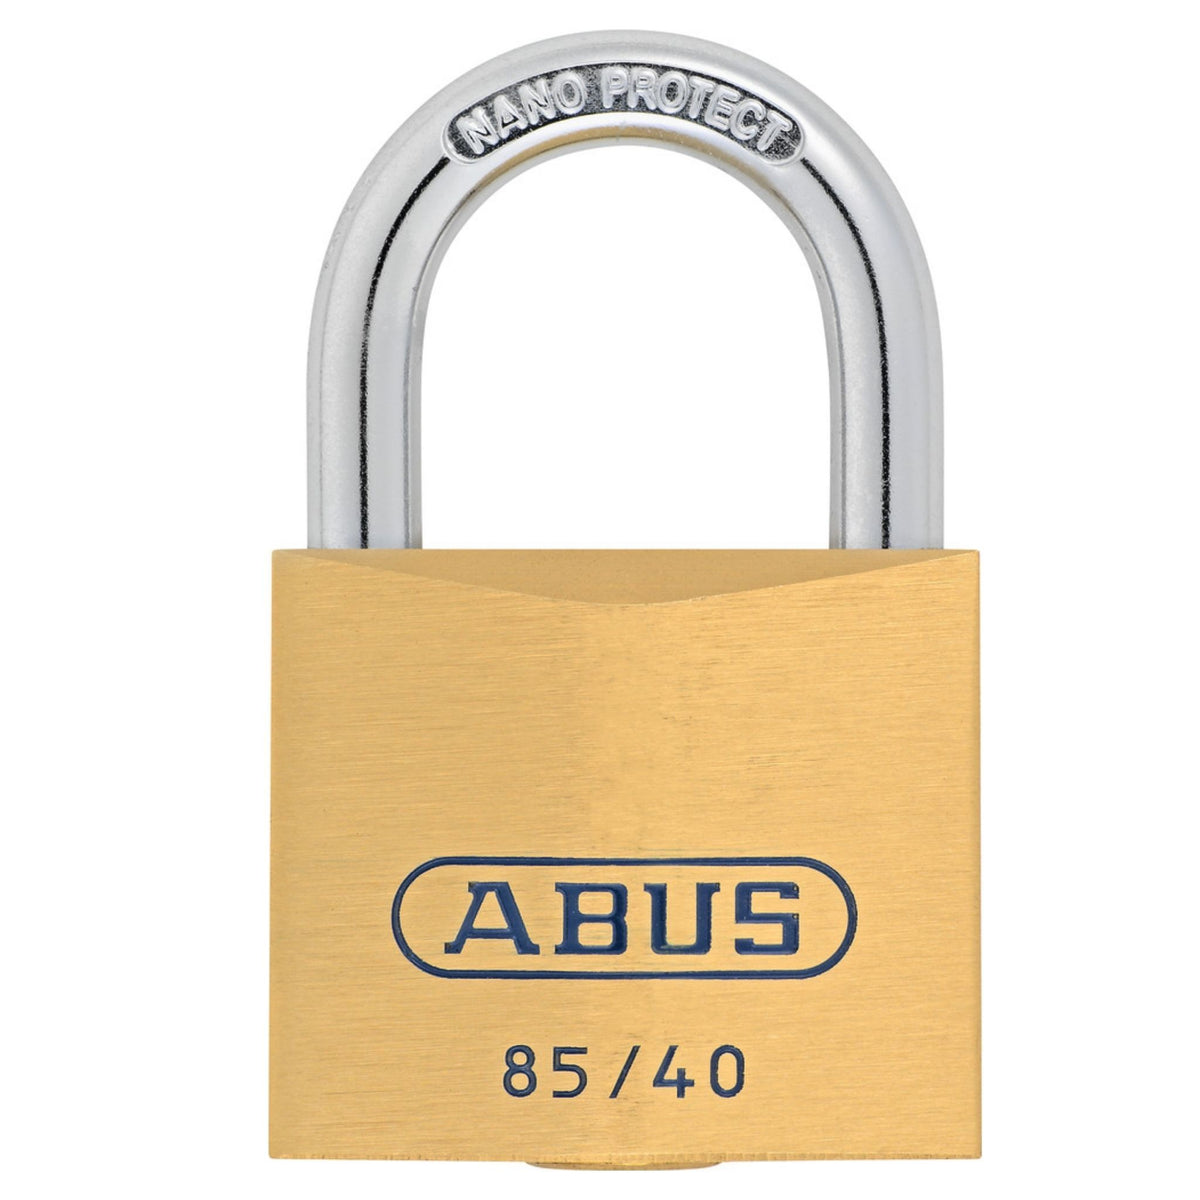 Abus 85/40 KA 0367 High Security Padlocks Keyed Alike to Match Existing Key Number KA0367 - The Lock Source